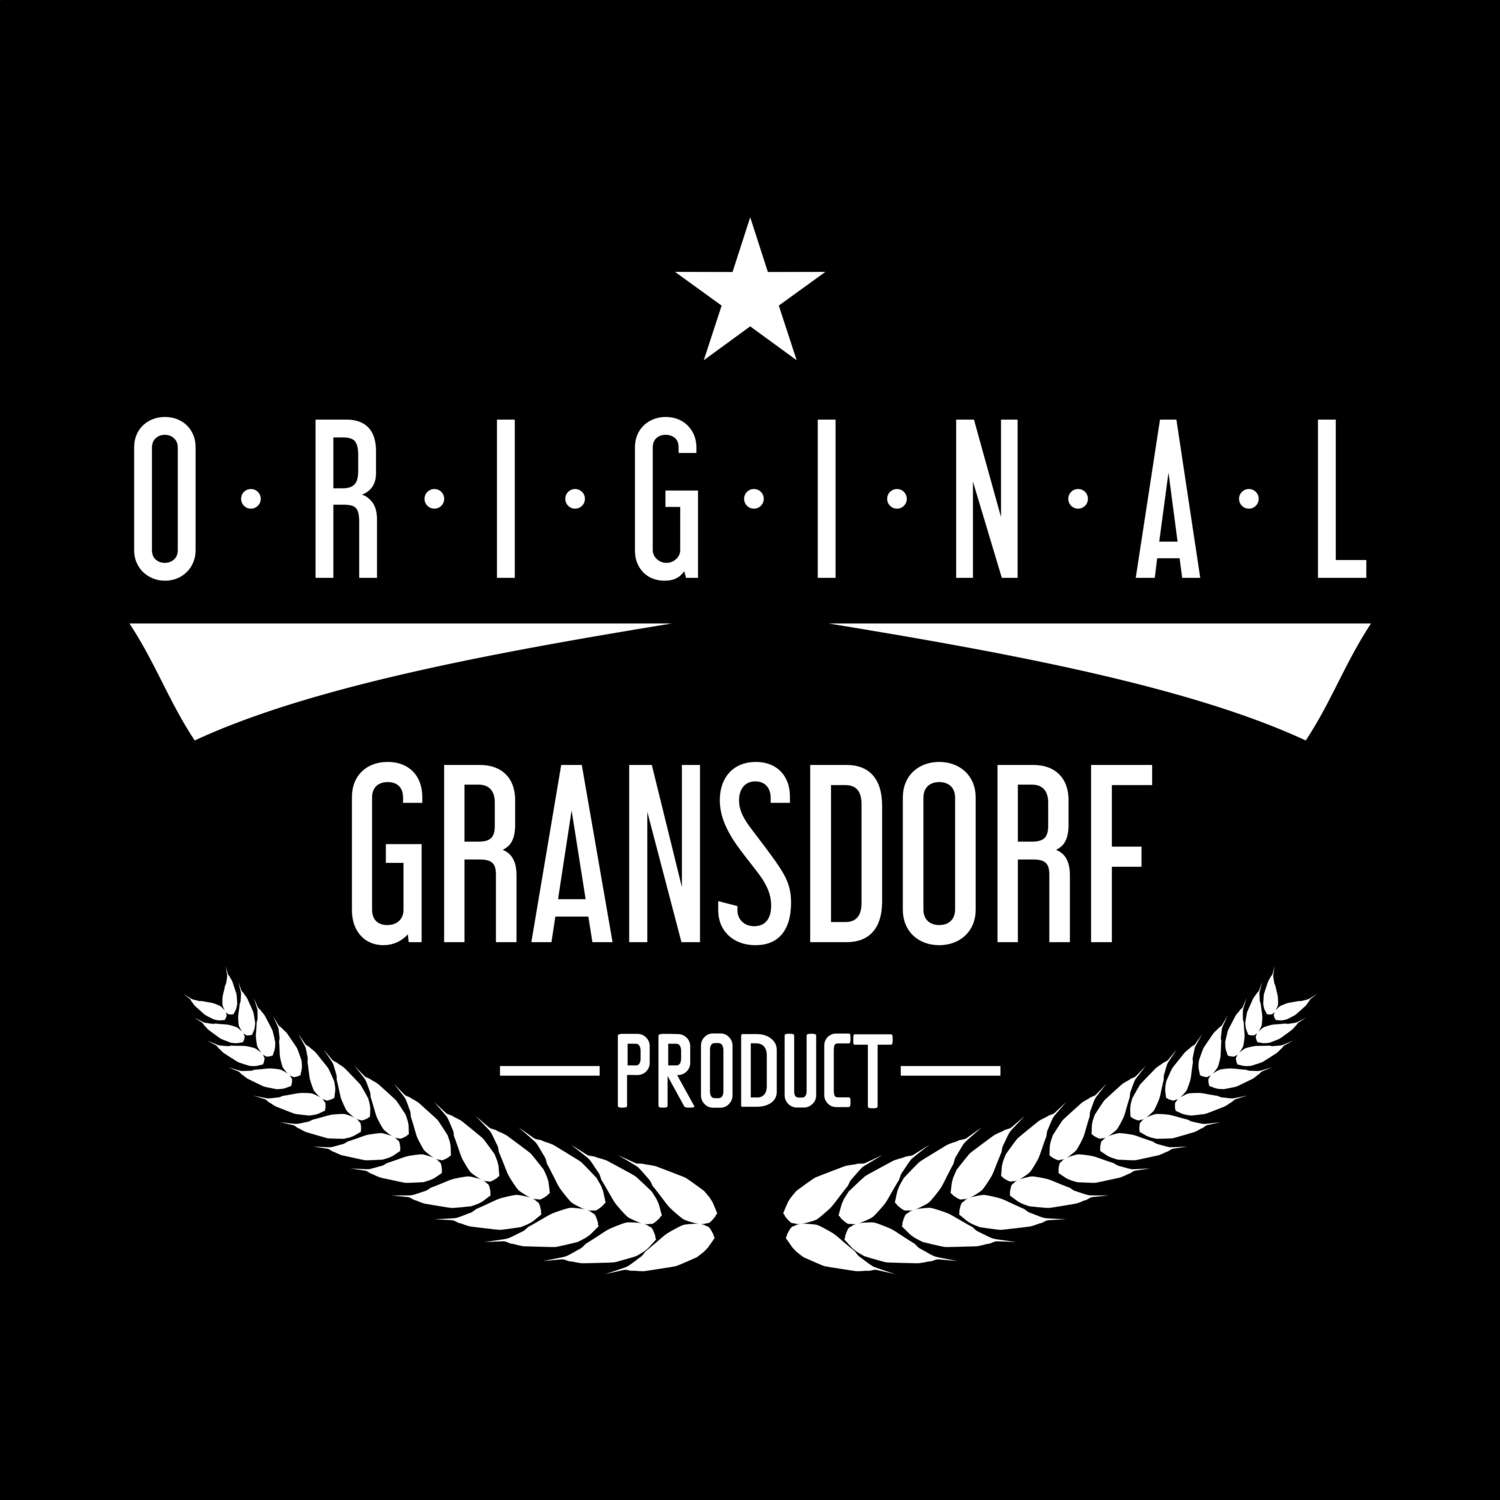 Gransdorf T-Shirt »Original Product«